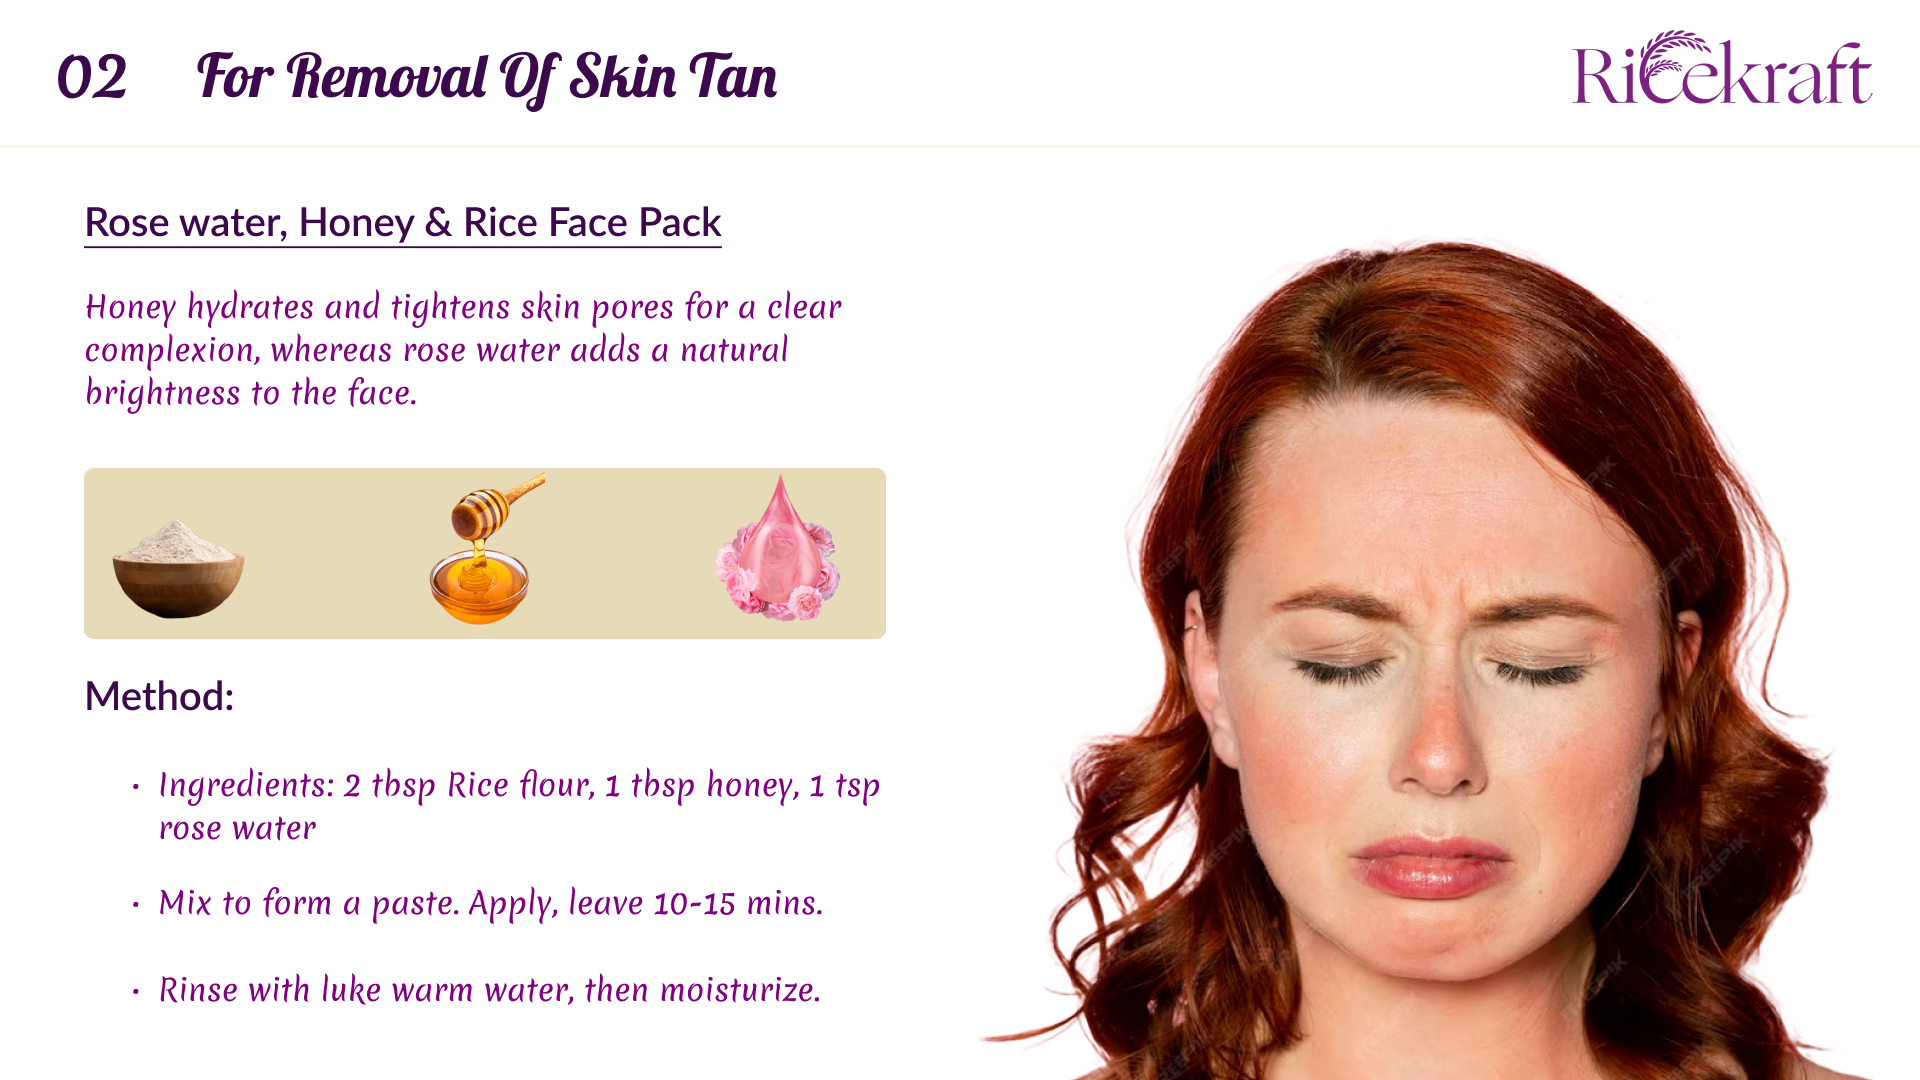 Rose water, Honey and Rice Face Pack DIY for Tan